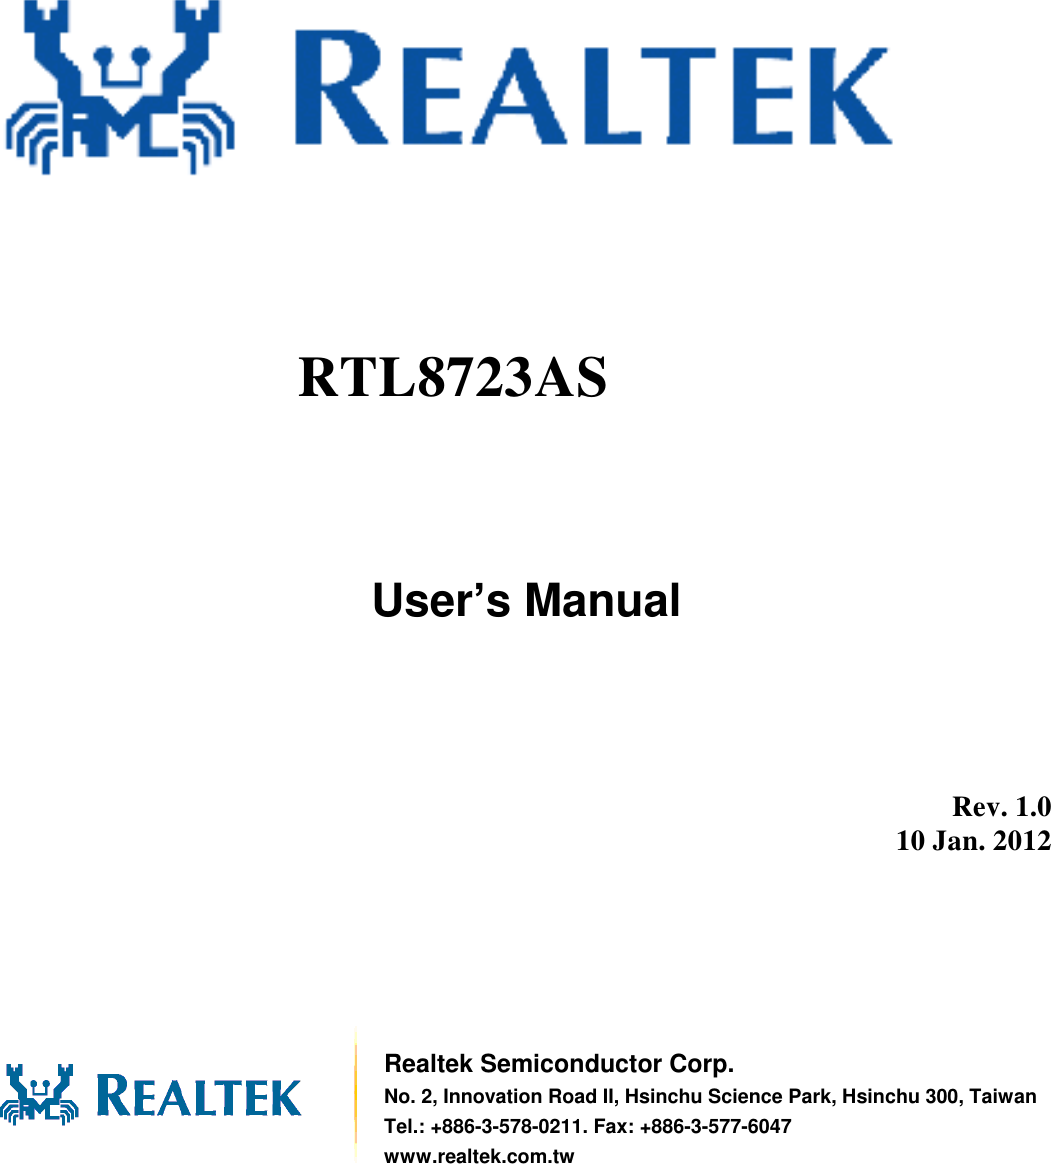                 User’s Manual          Rev. 1.0 10 Jan. 2012        Realtek Semiconductor Corp. No. 2, Innovation Road II, Hsinchu Science Park, Hsinchu 300, Taiwan Tel.: +886-3-578-0211. Fax: +886-3-577-6047 www.realtek.com.tw RTL8723AS  